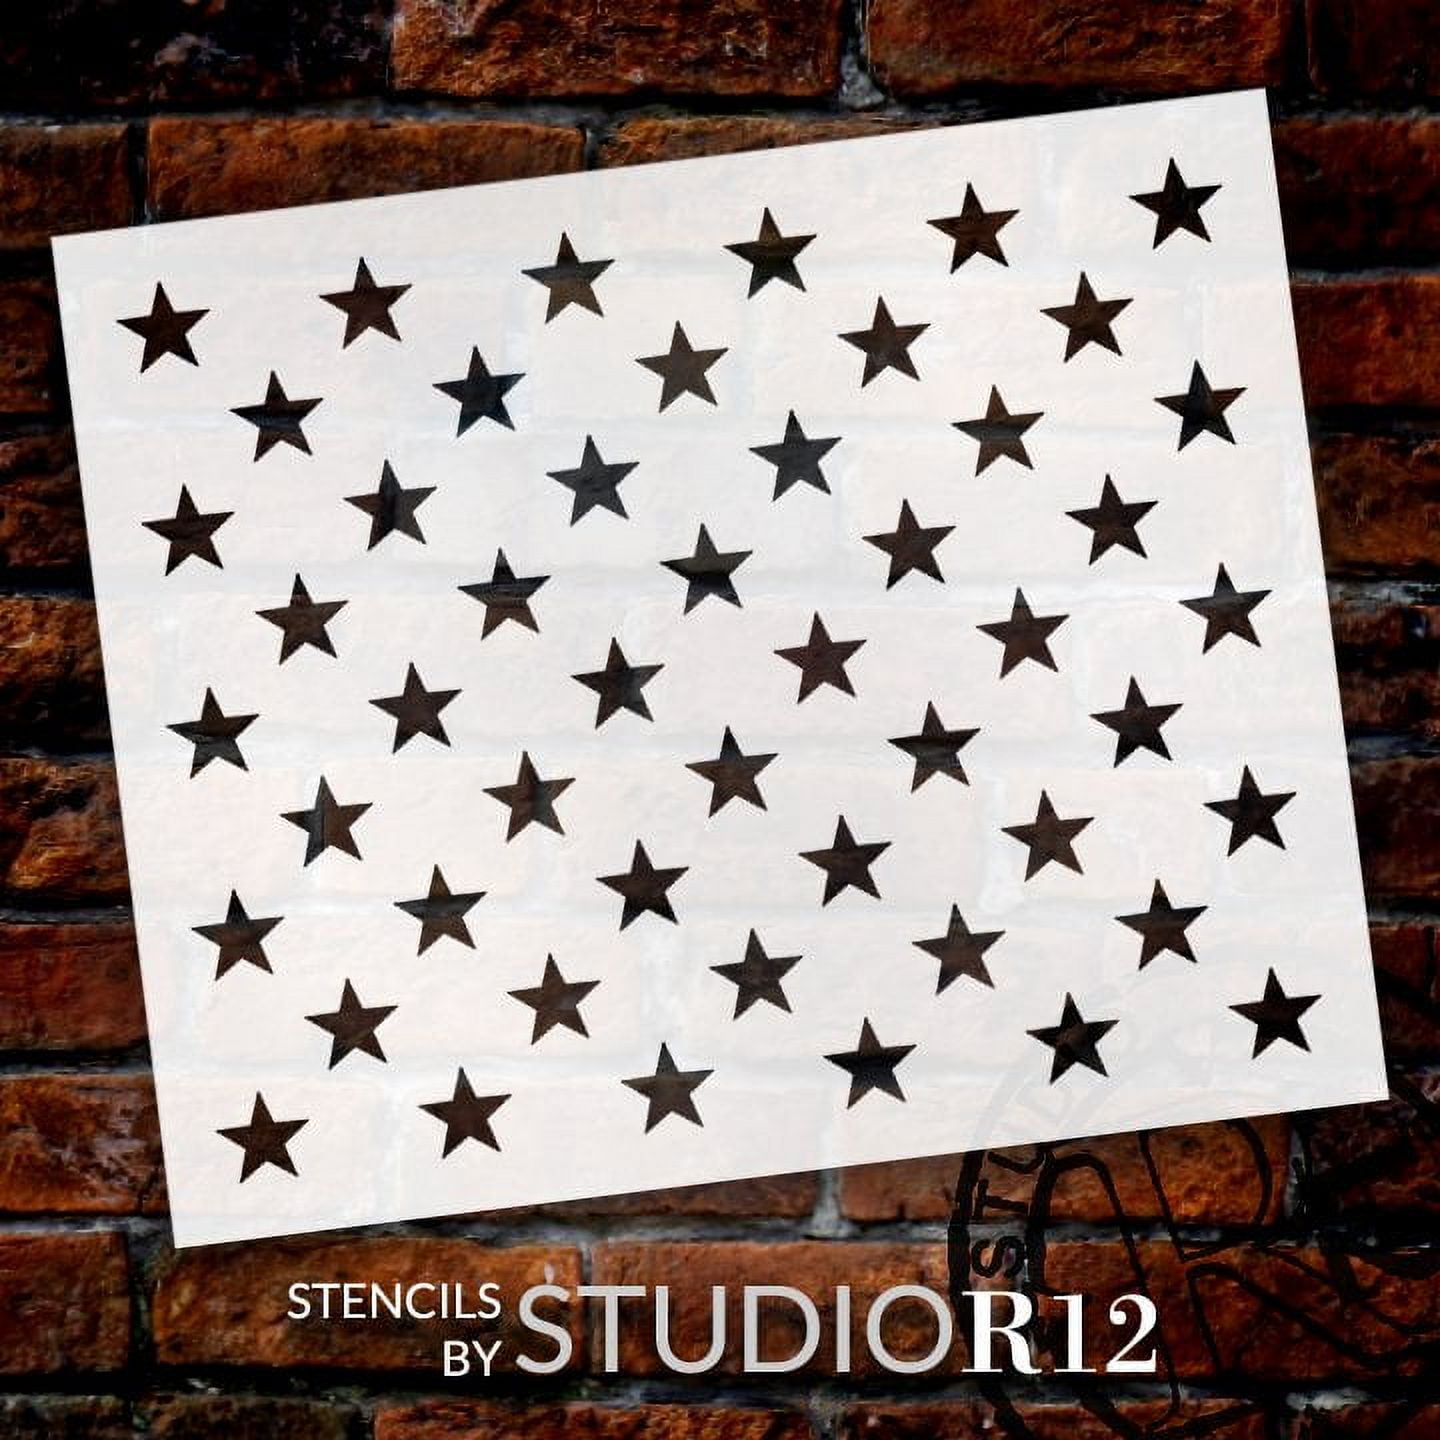 WISYOK American Flag 50 Star Stencils and 13 Stars 1776 Templates